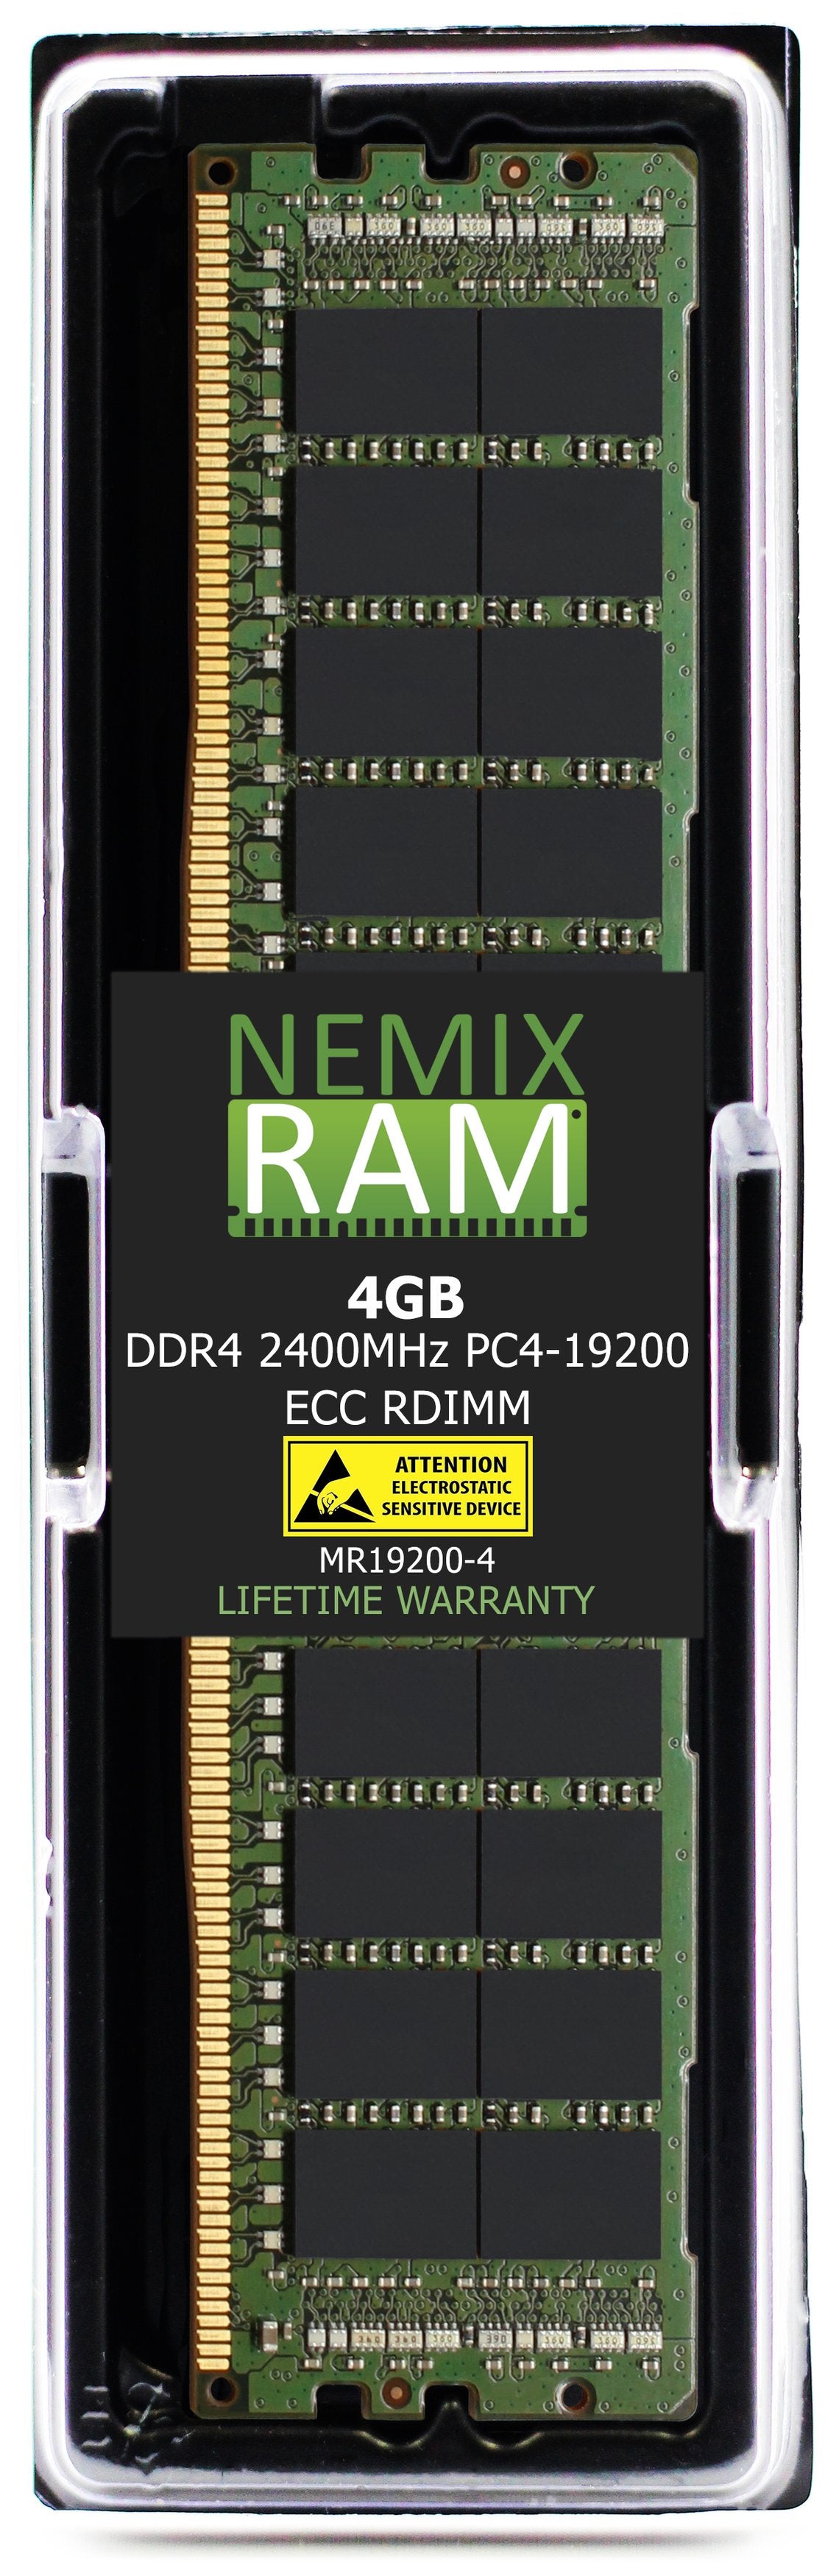 8GB DDR4 2400MHZ PC4-19200 RDIMM Compatible with Supermicro MEM-DR480L-SL01-ER24